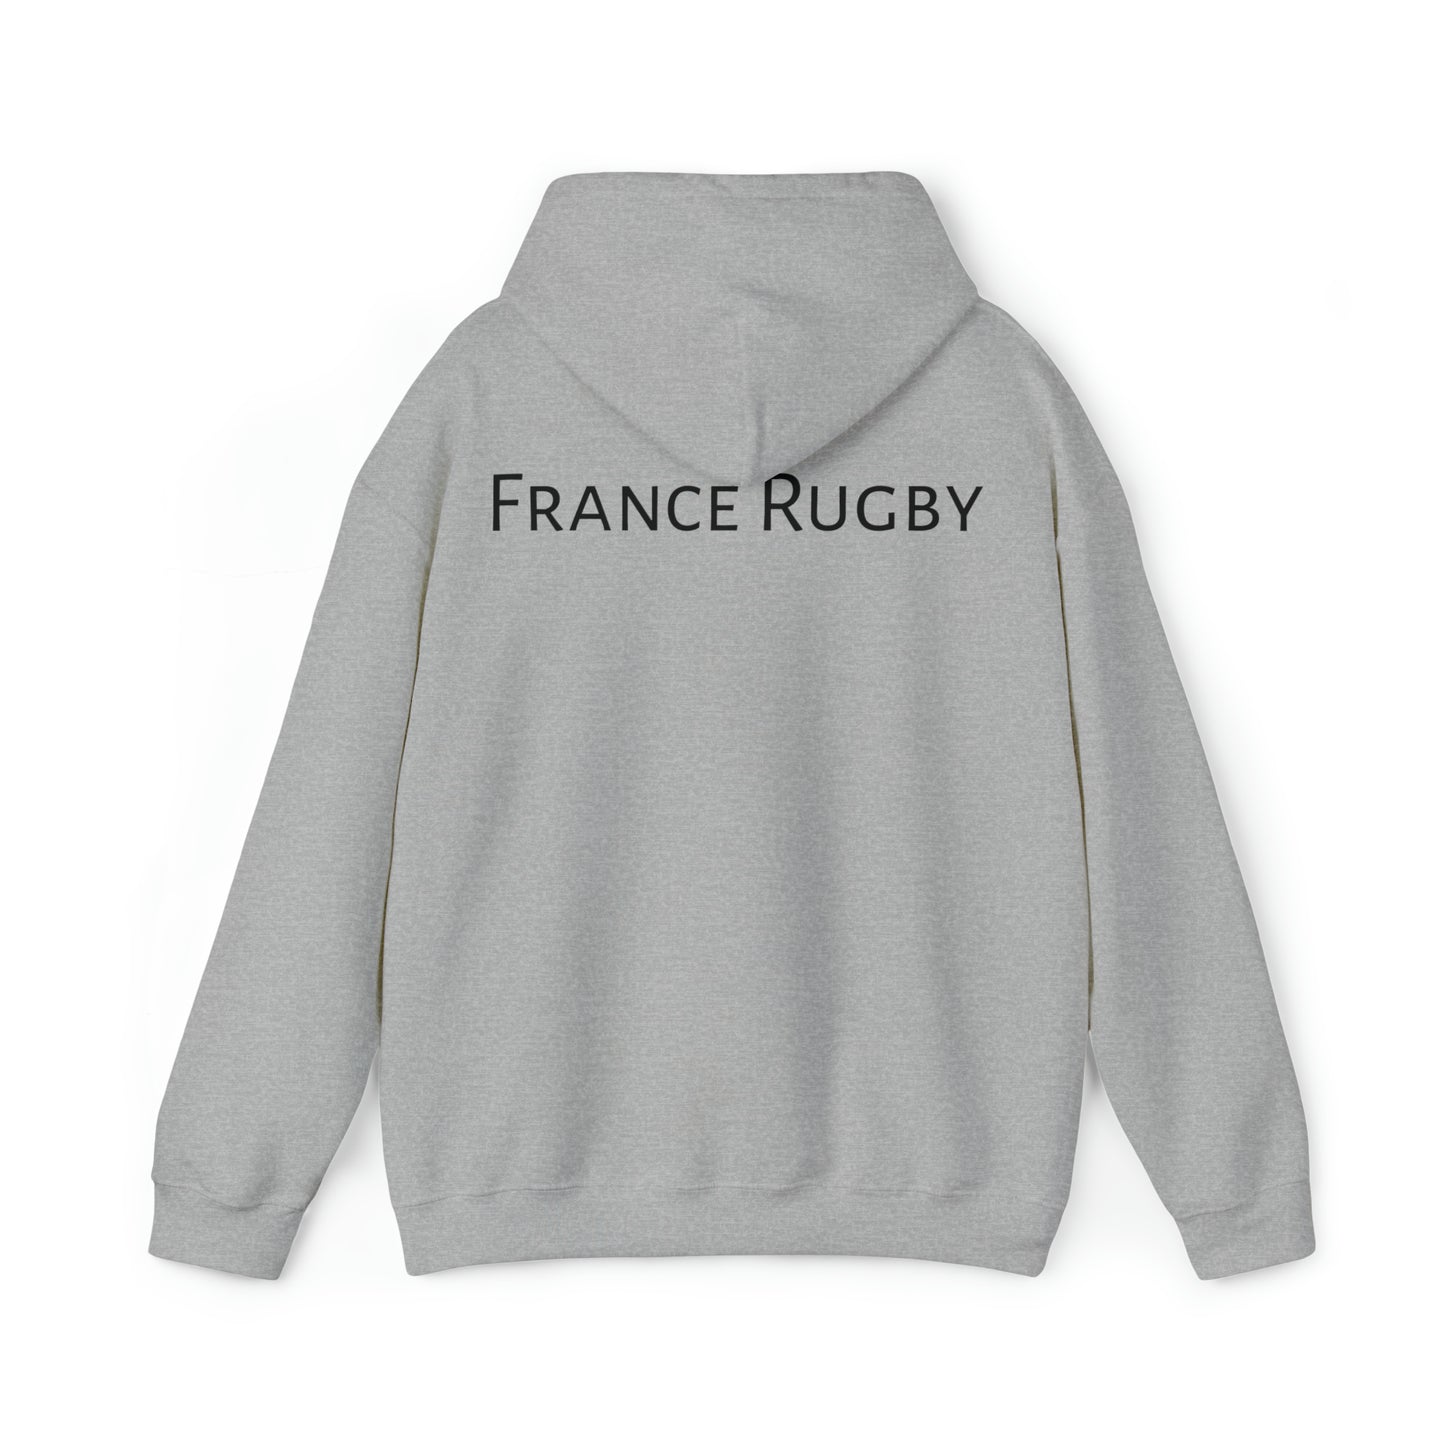 Napoleon Rugby - light hoodies